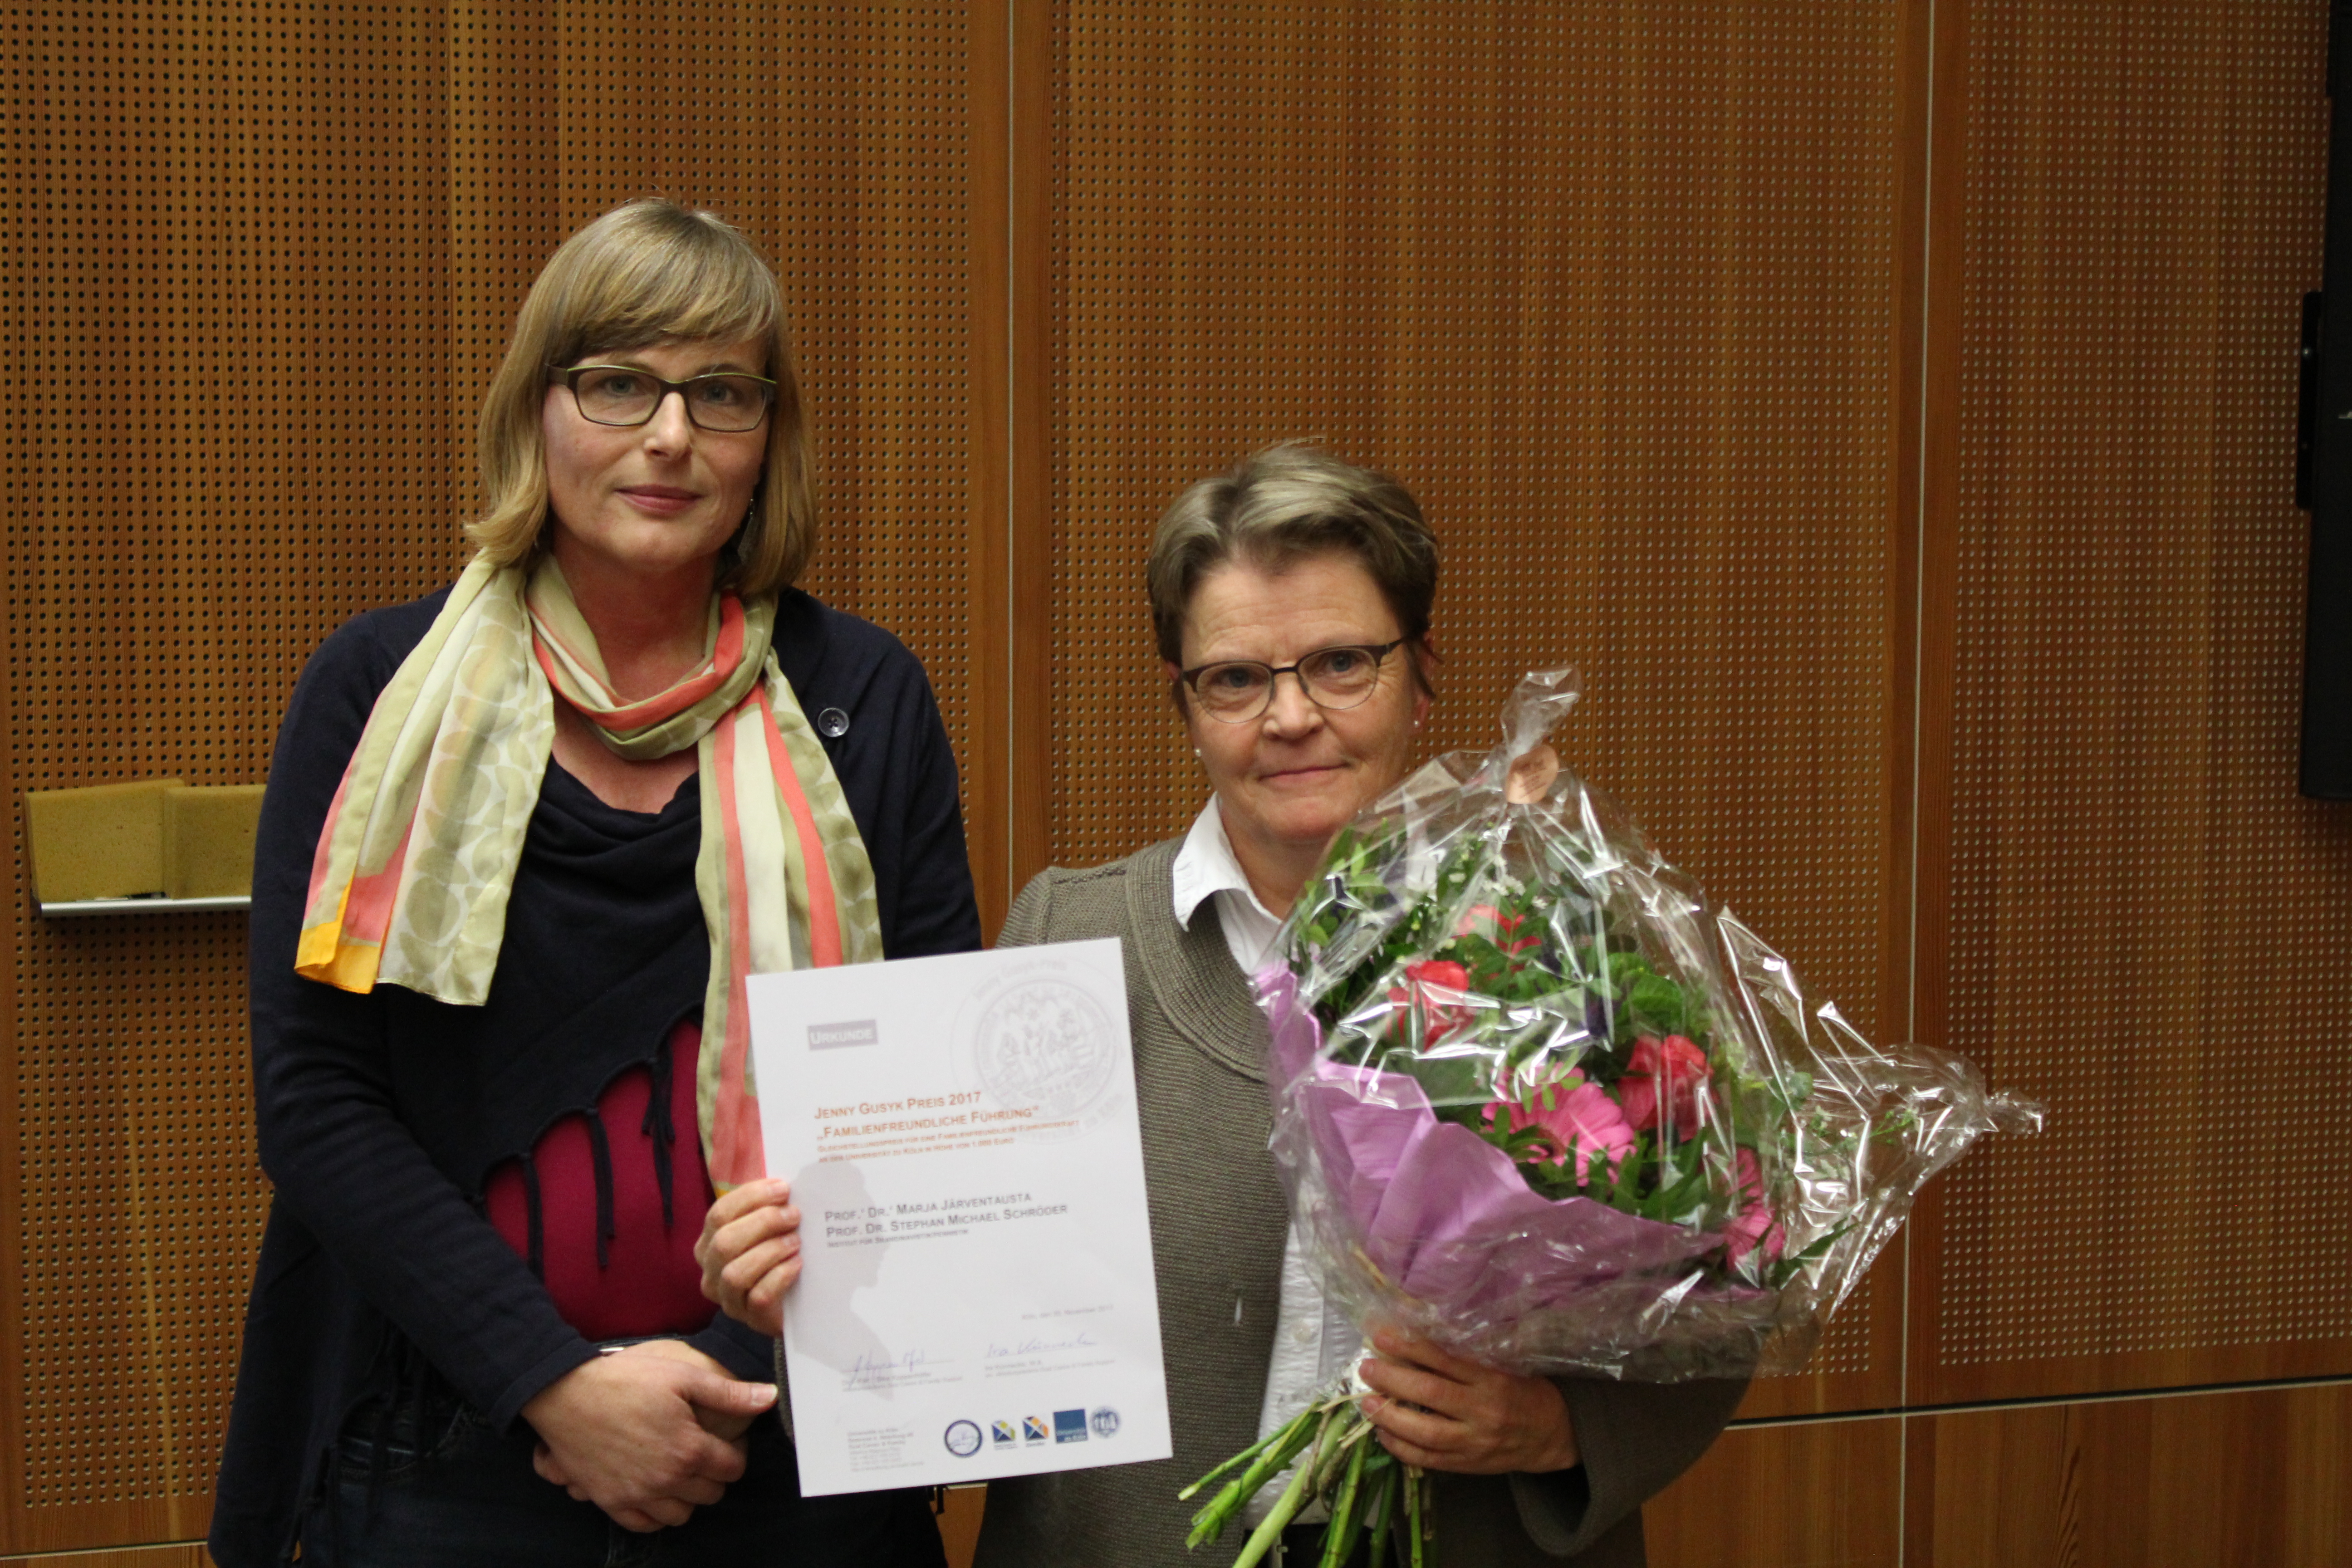 The winner of the Jenny Gusyk Prize "Family Friendly Leadership", Professor Järventausta